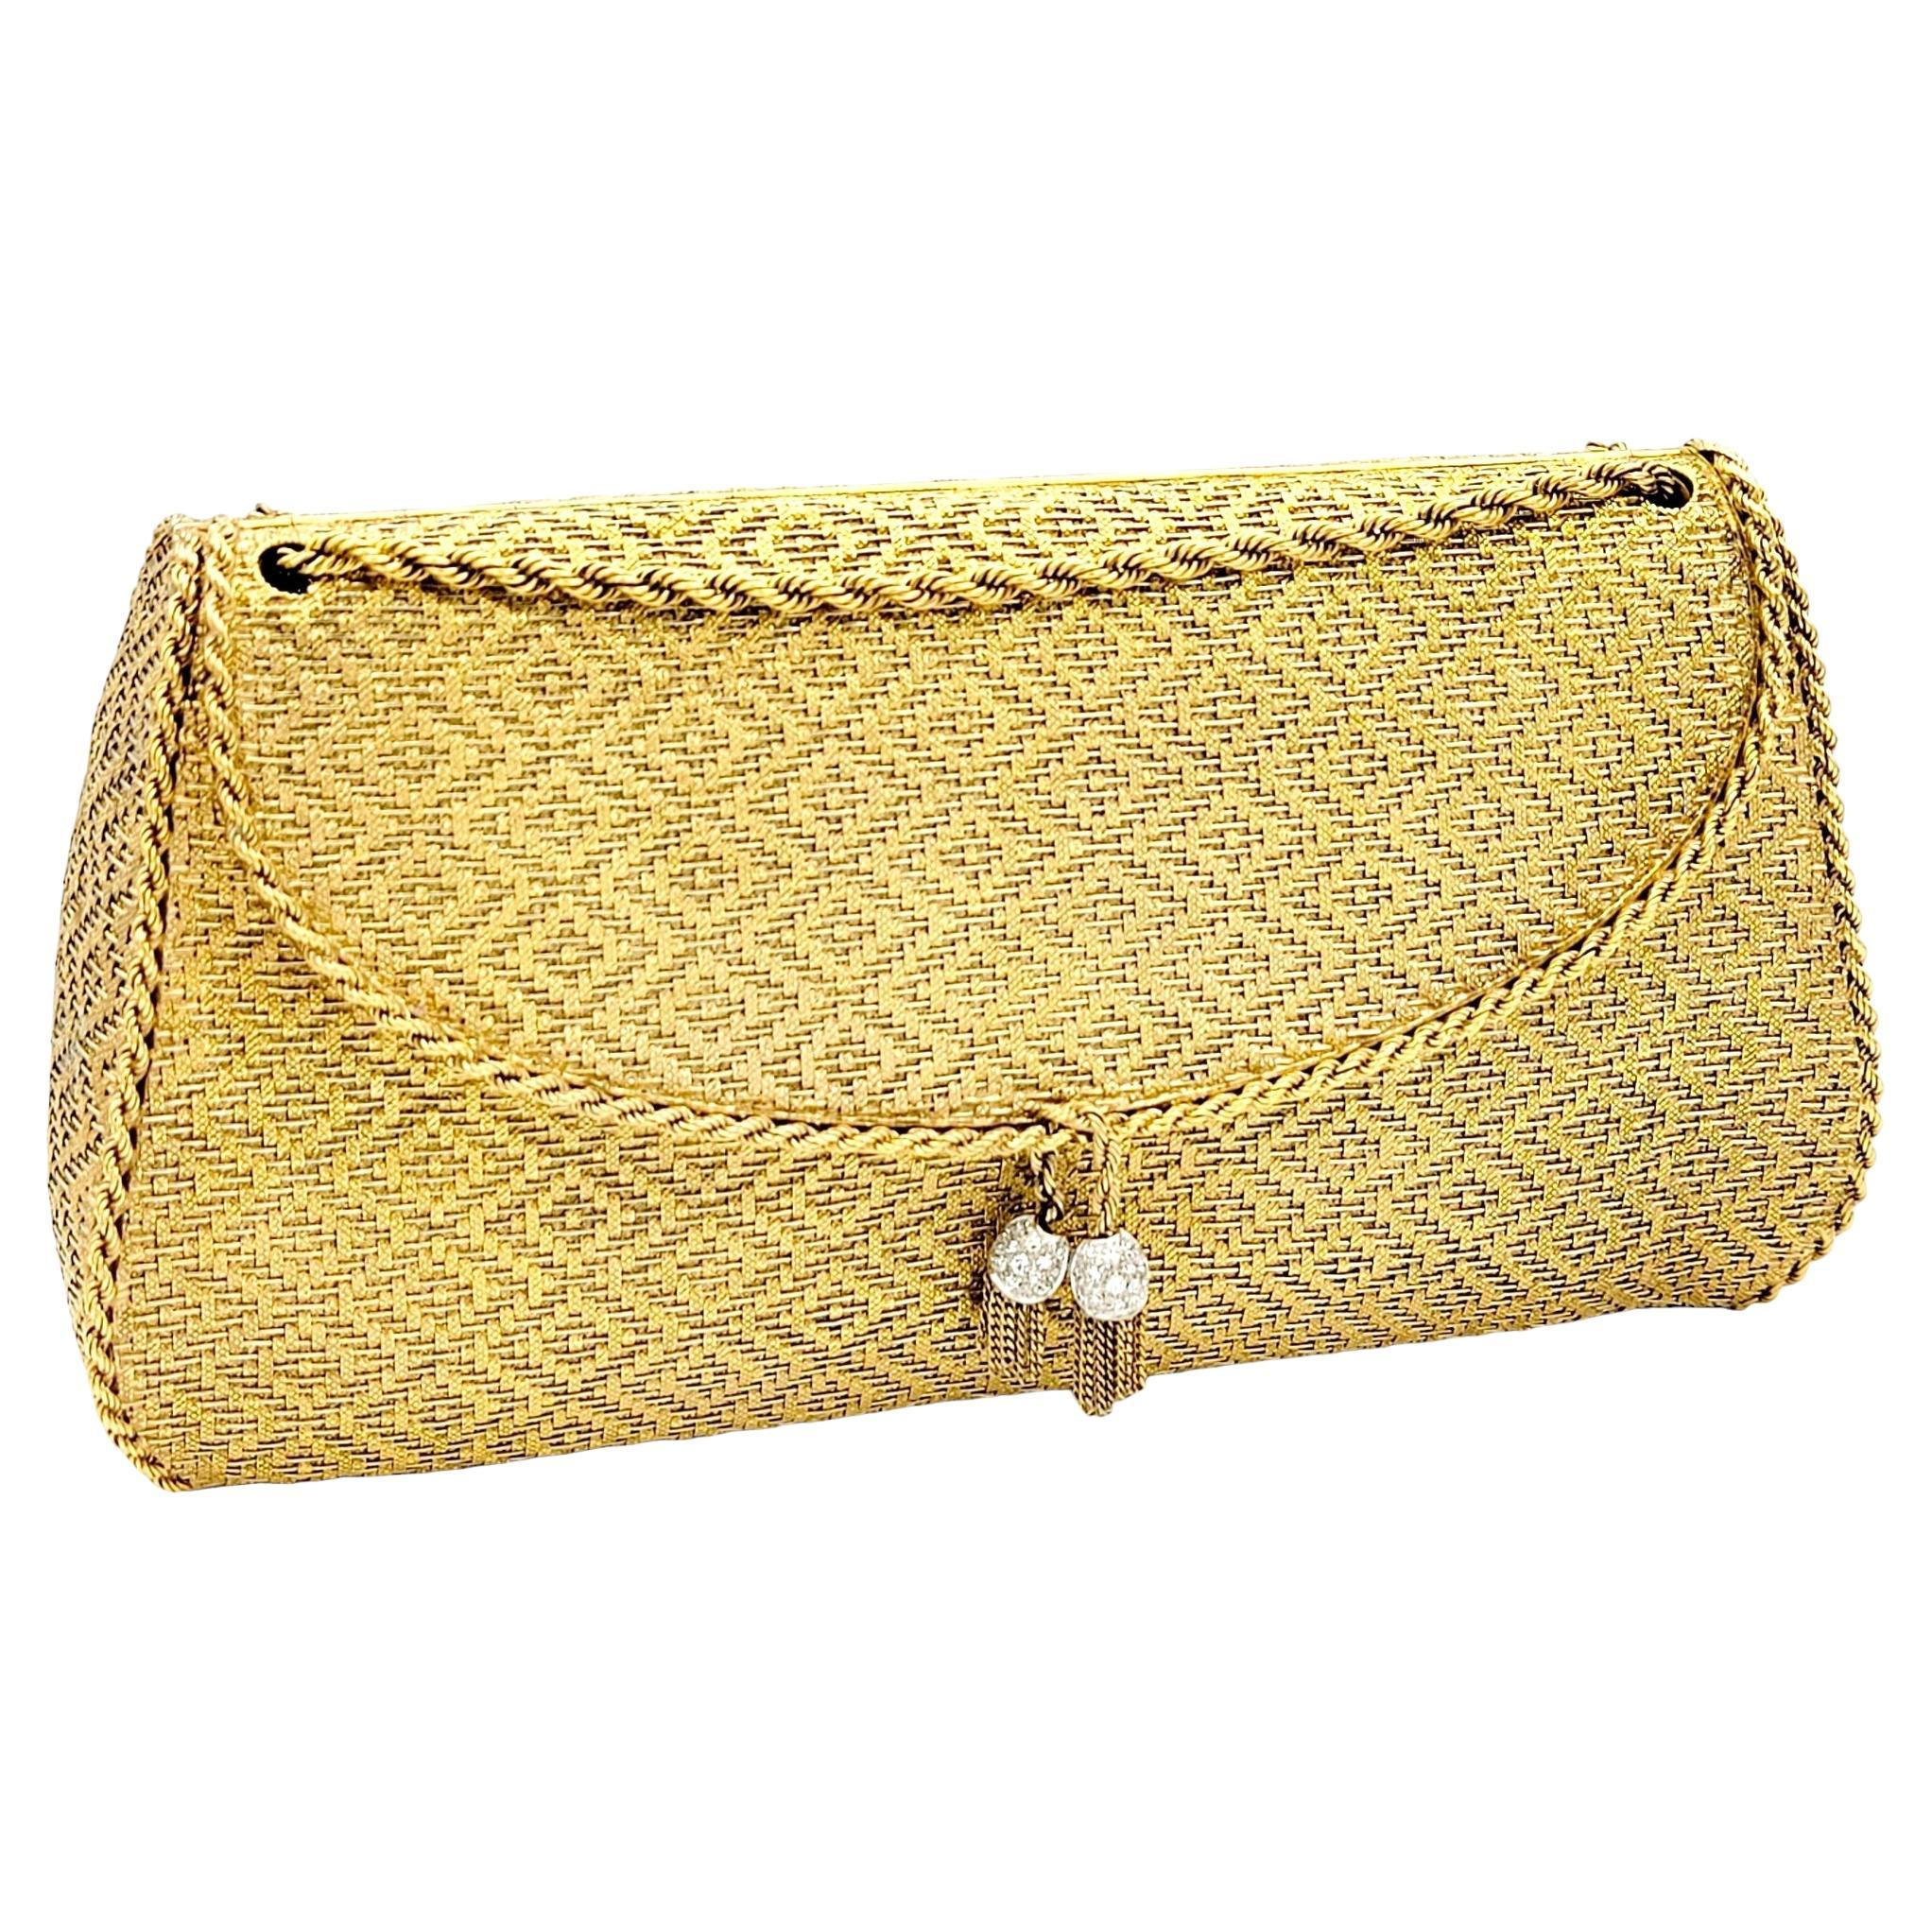 Vintage Evening Purse 18 Karat Yellow Gold Woven Solid Bag Diamond Pave Tassles